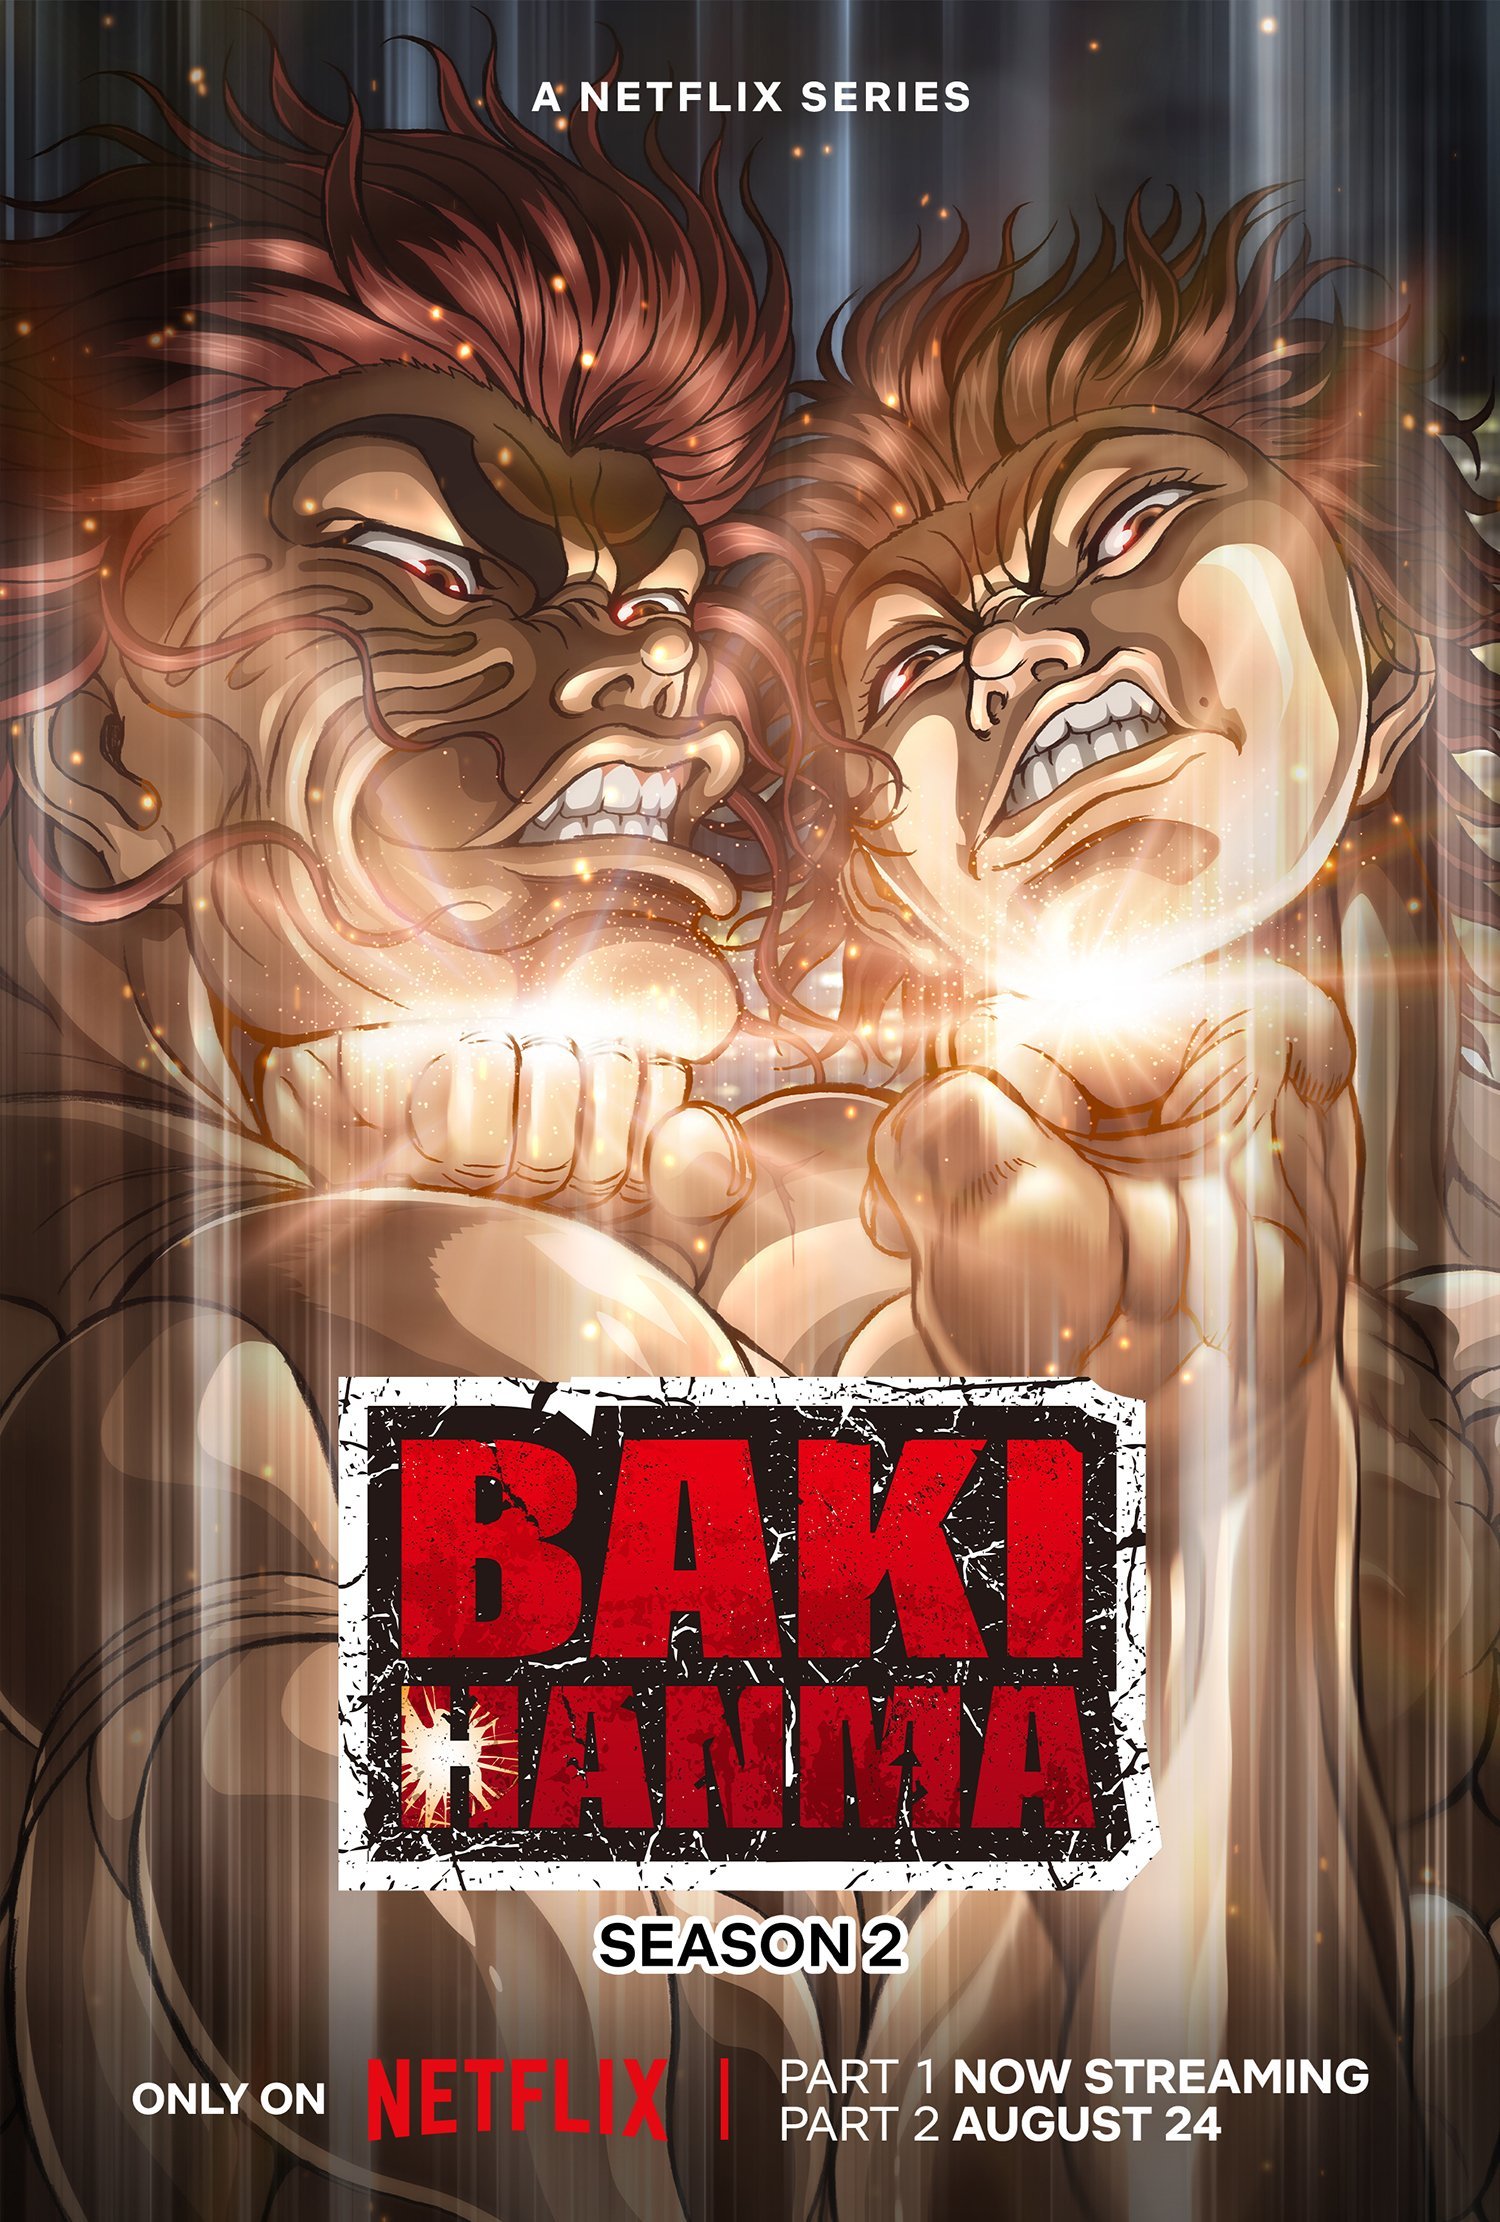 Baki Hanma: 2ª Temporada do anime estreia na Netflix